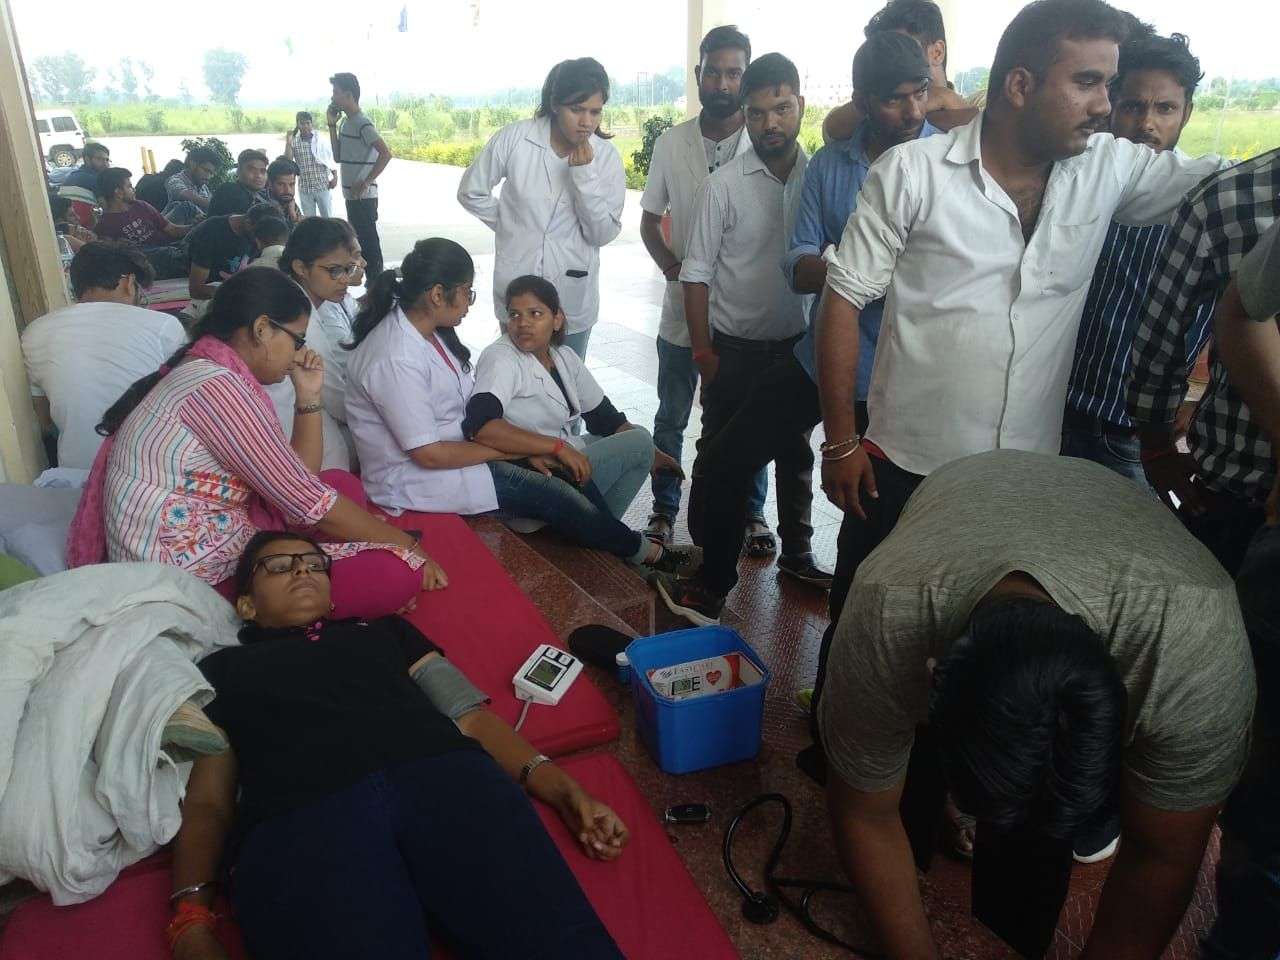 Medical students sitting on hunger strike deteriorate